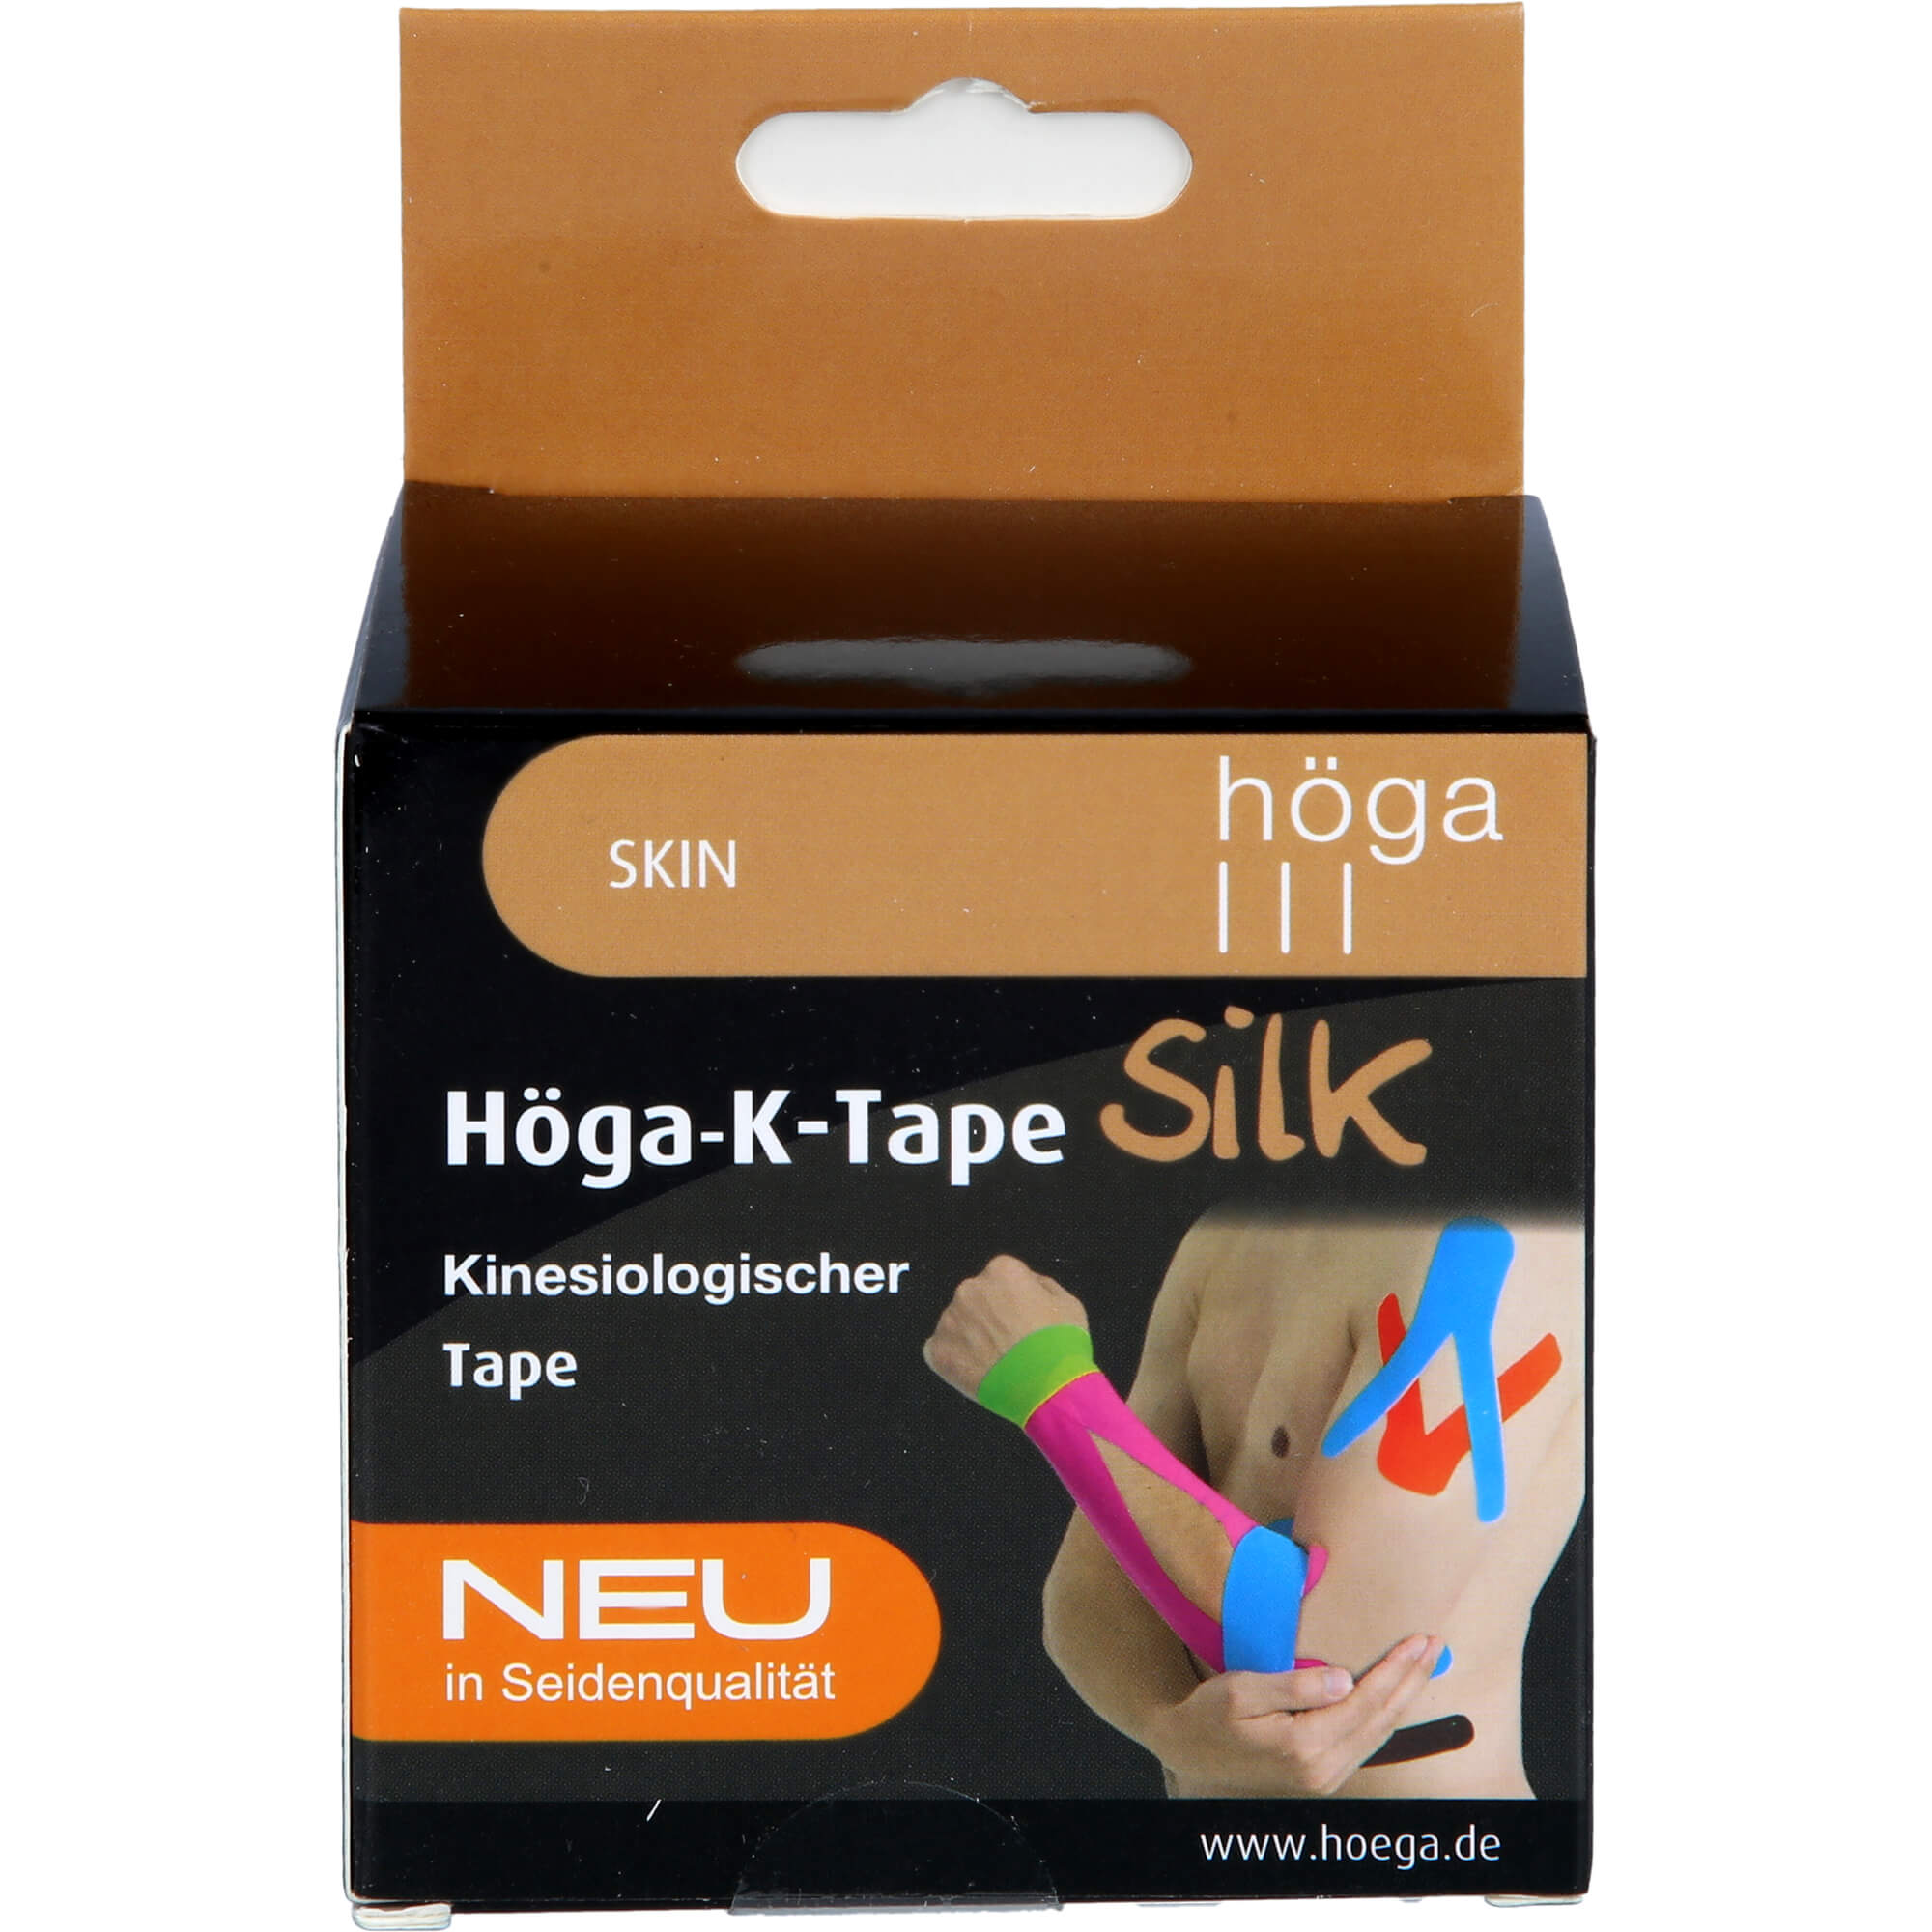 HÖGA-K-TAPE Silk 5 cmx5 m l.fr.skin kinesiol.Tape